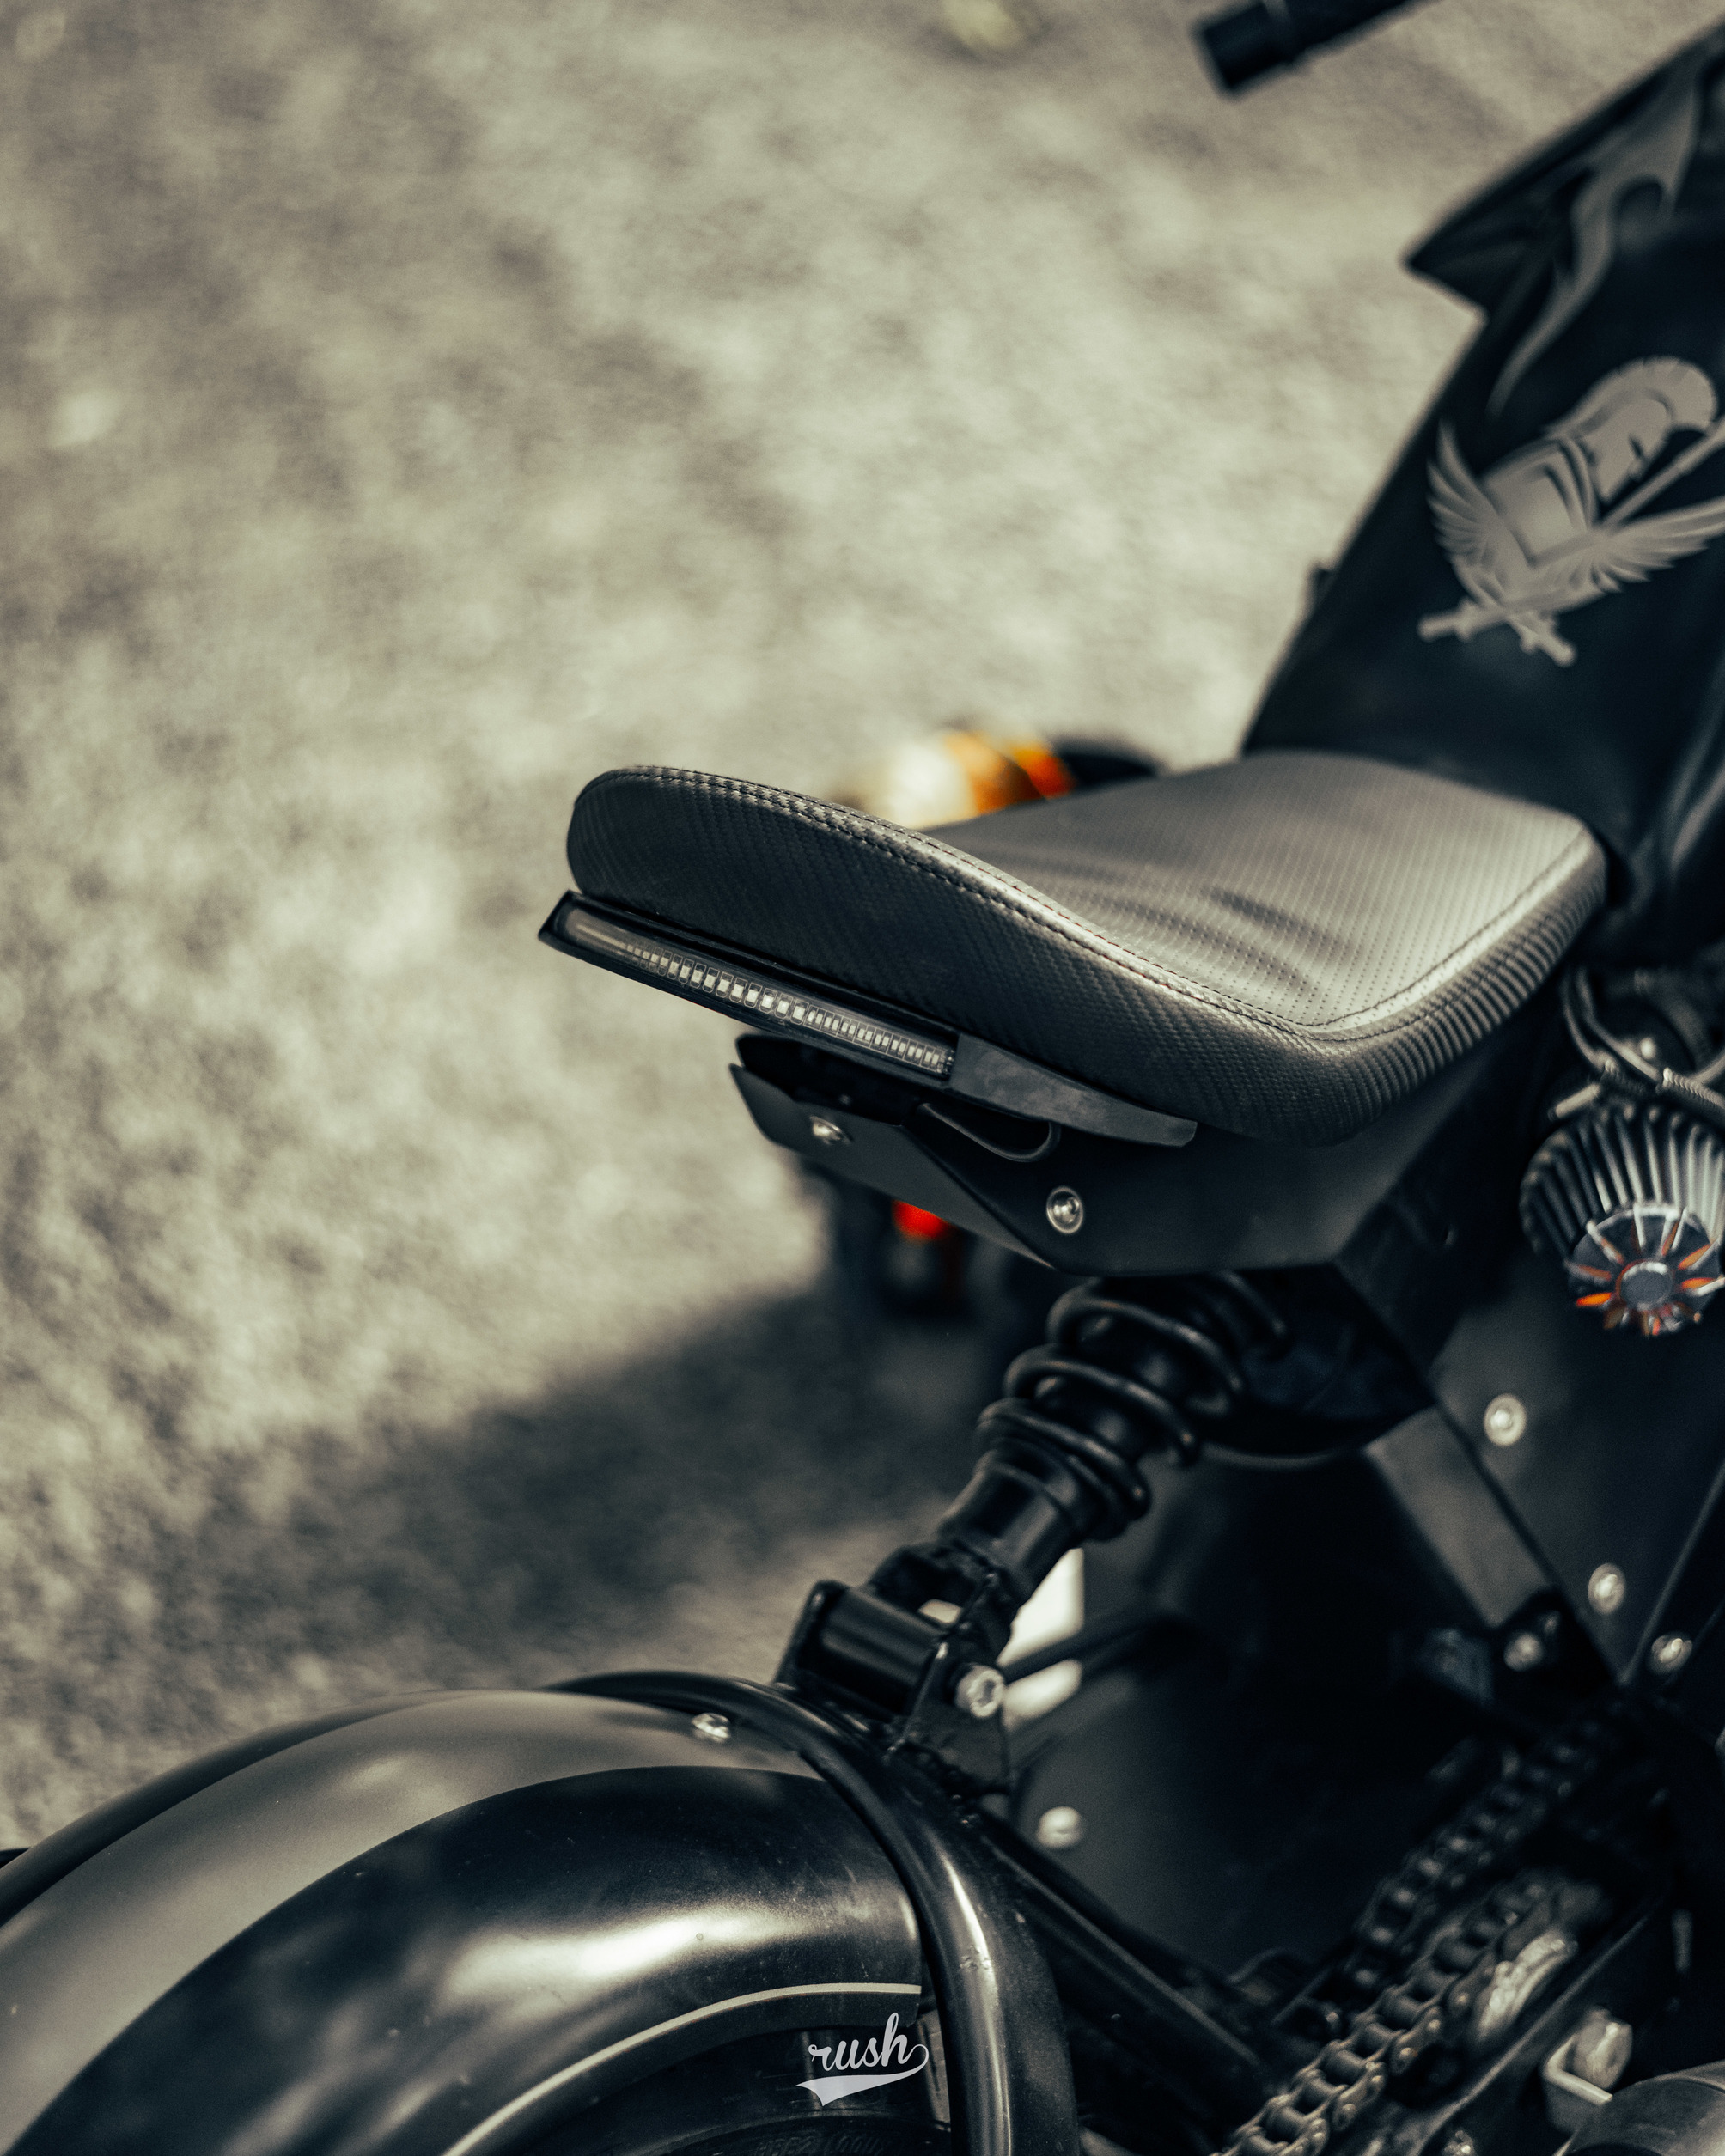 Meet 500cc Royal Enfield Yoddha Naked Streetfighter by Neev Motorcycles - snapshot